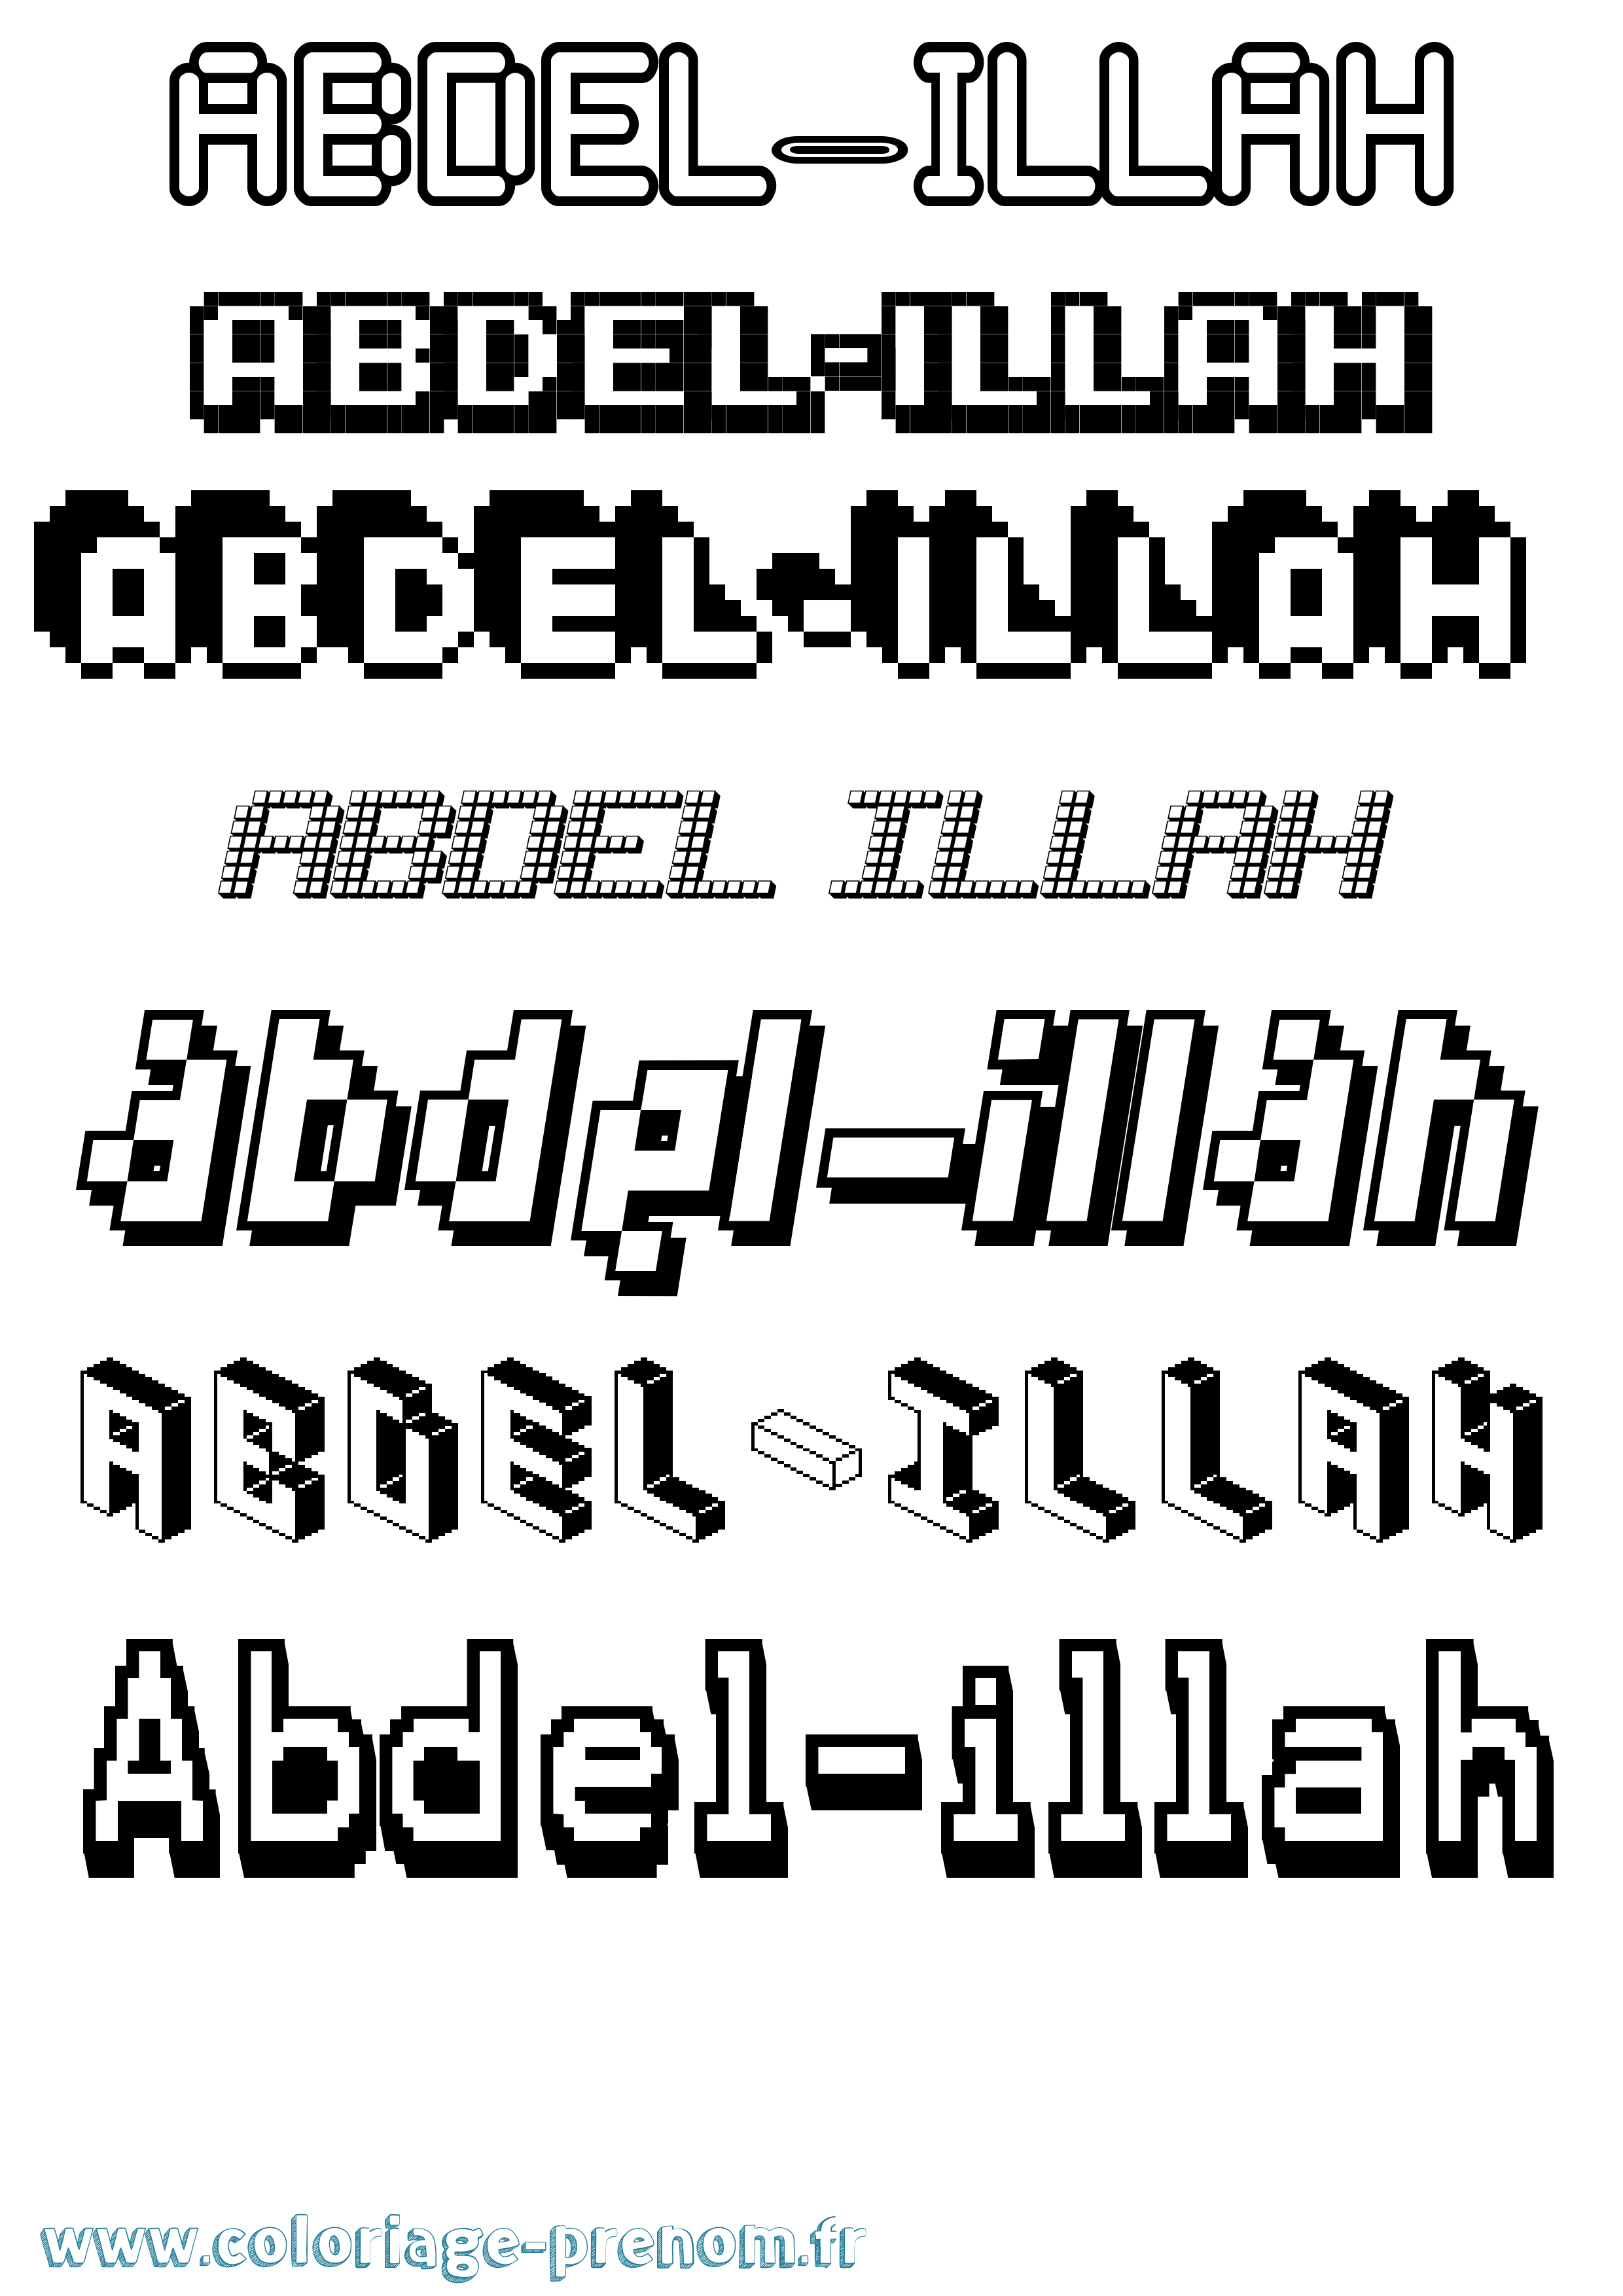 Coloriage prénom Abdel-Illah Pixel